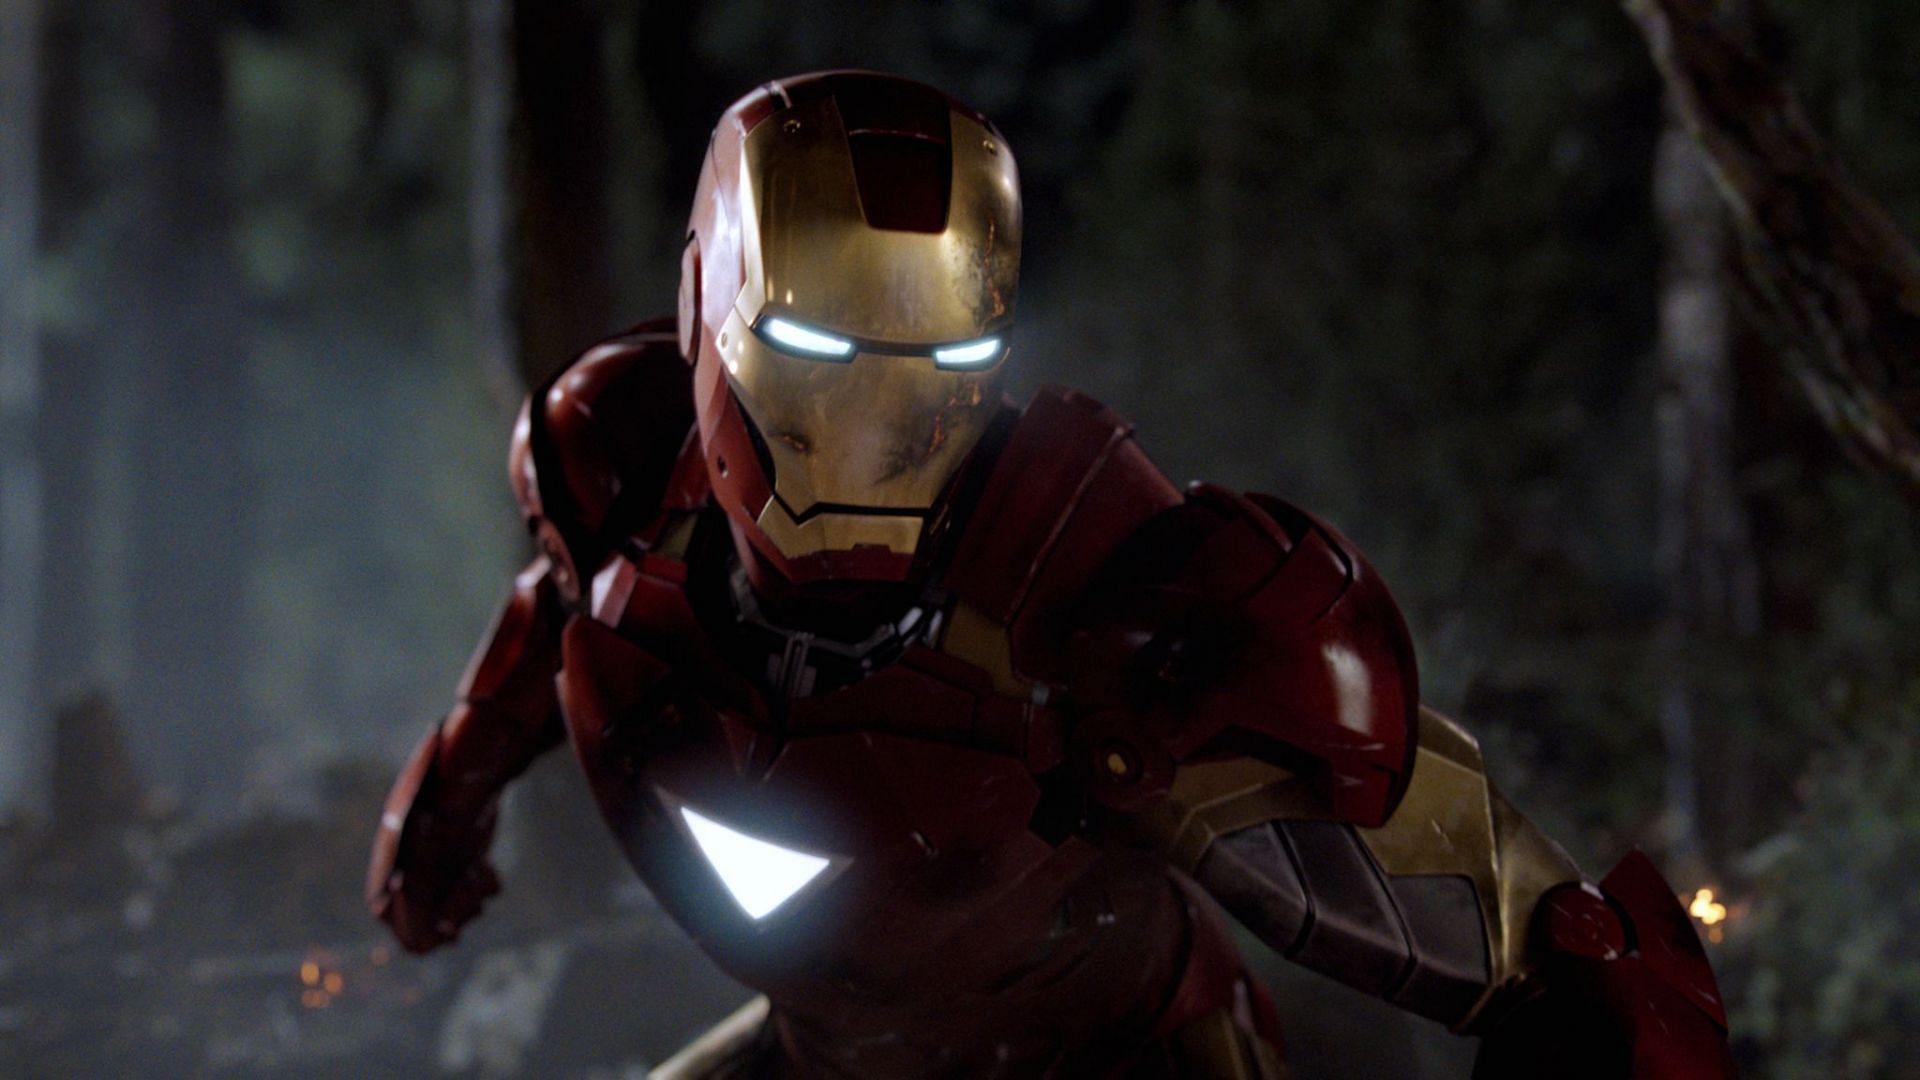 Robert Downey Jr. stars as Tony Stark, one of the founding members of the Avengers (Image via Marvel Studios)